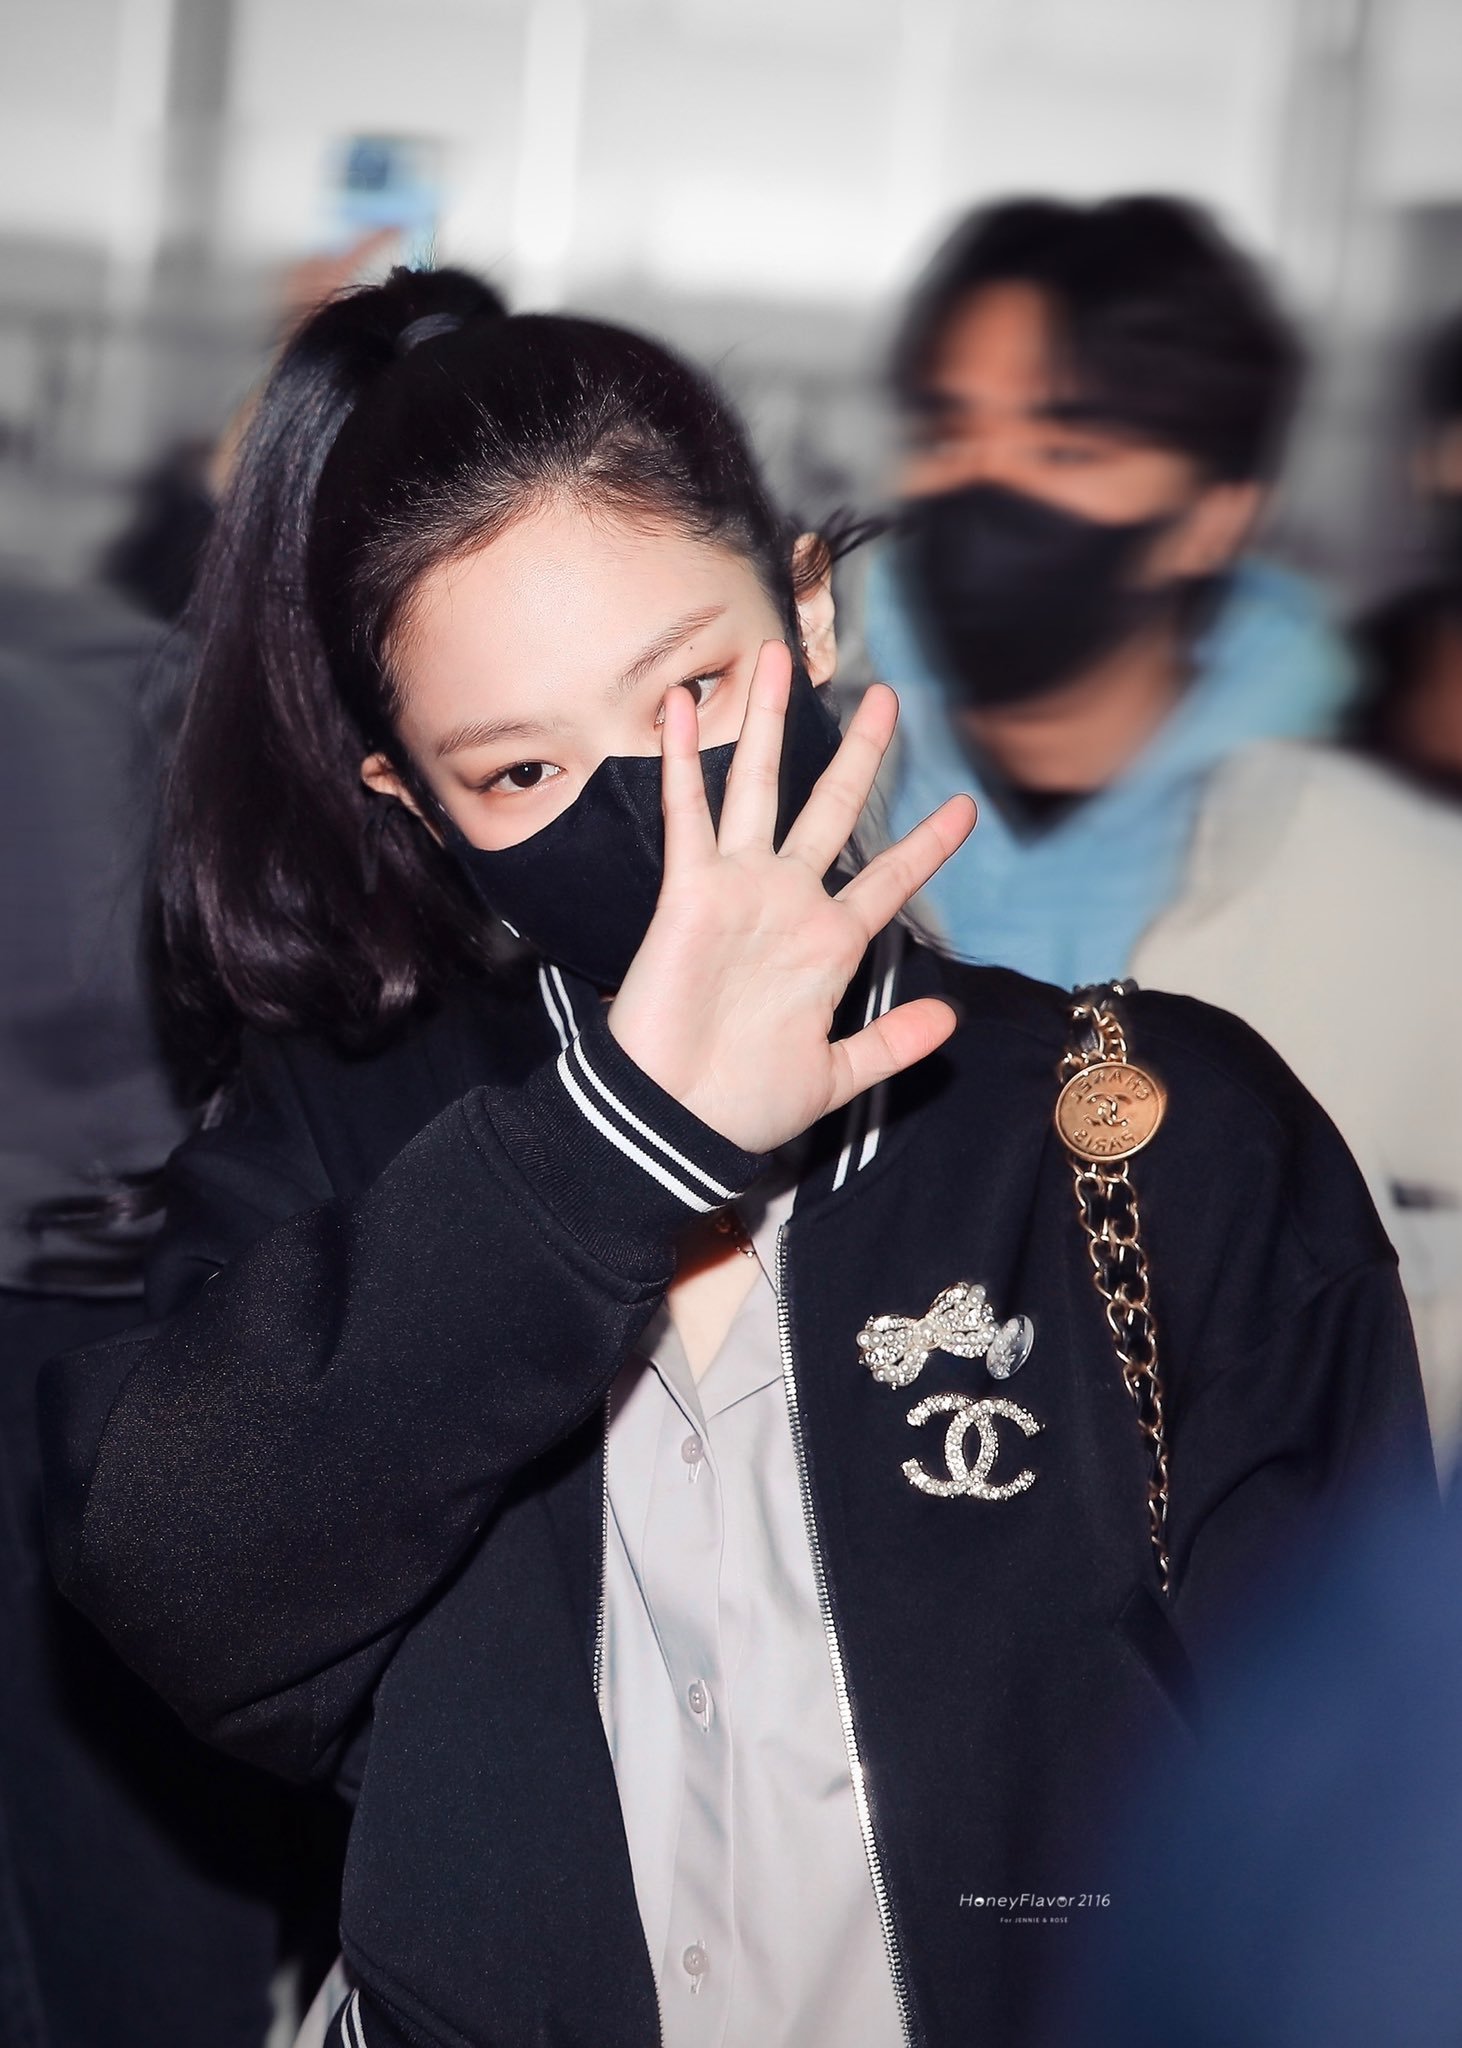 Blackpink Jennie at Incheon Airport